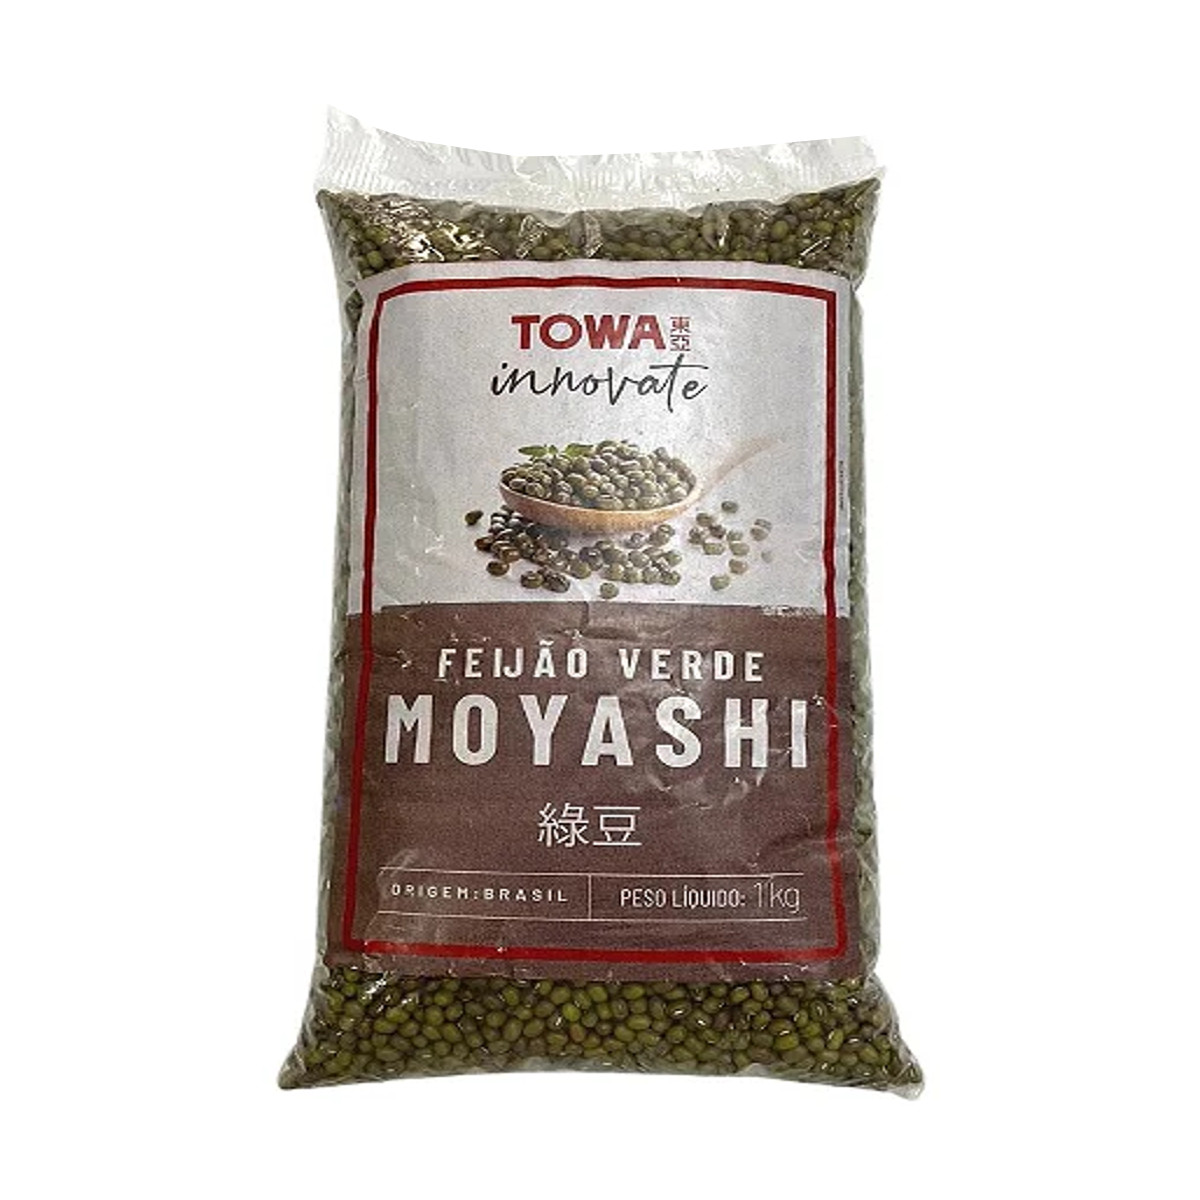 Feijão Verde Moyashi Towa - 1 kg